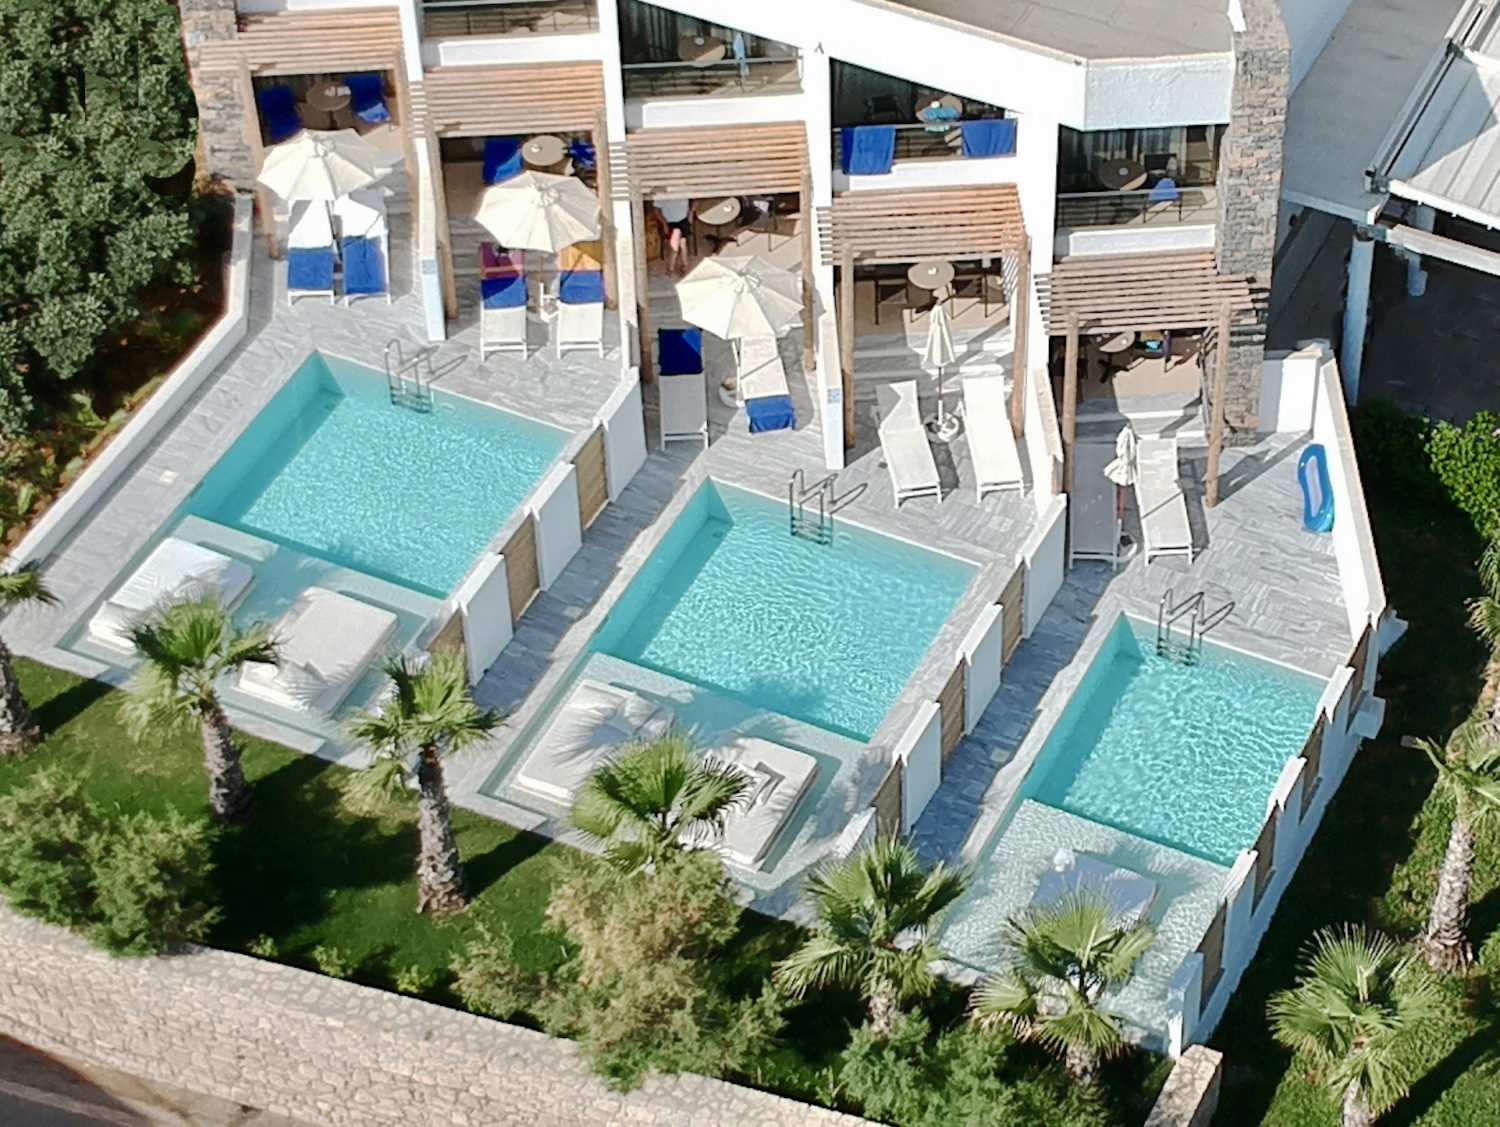 Island Hotel Kreta Private Pool The Island Hotel